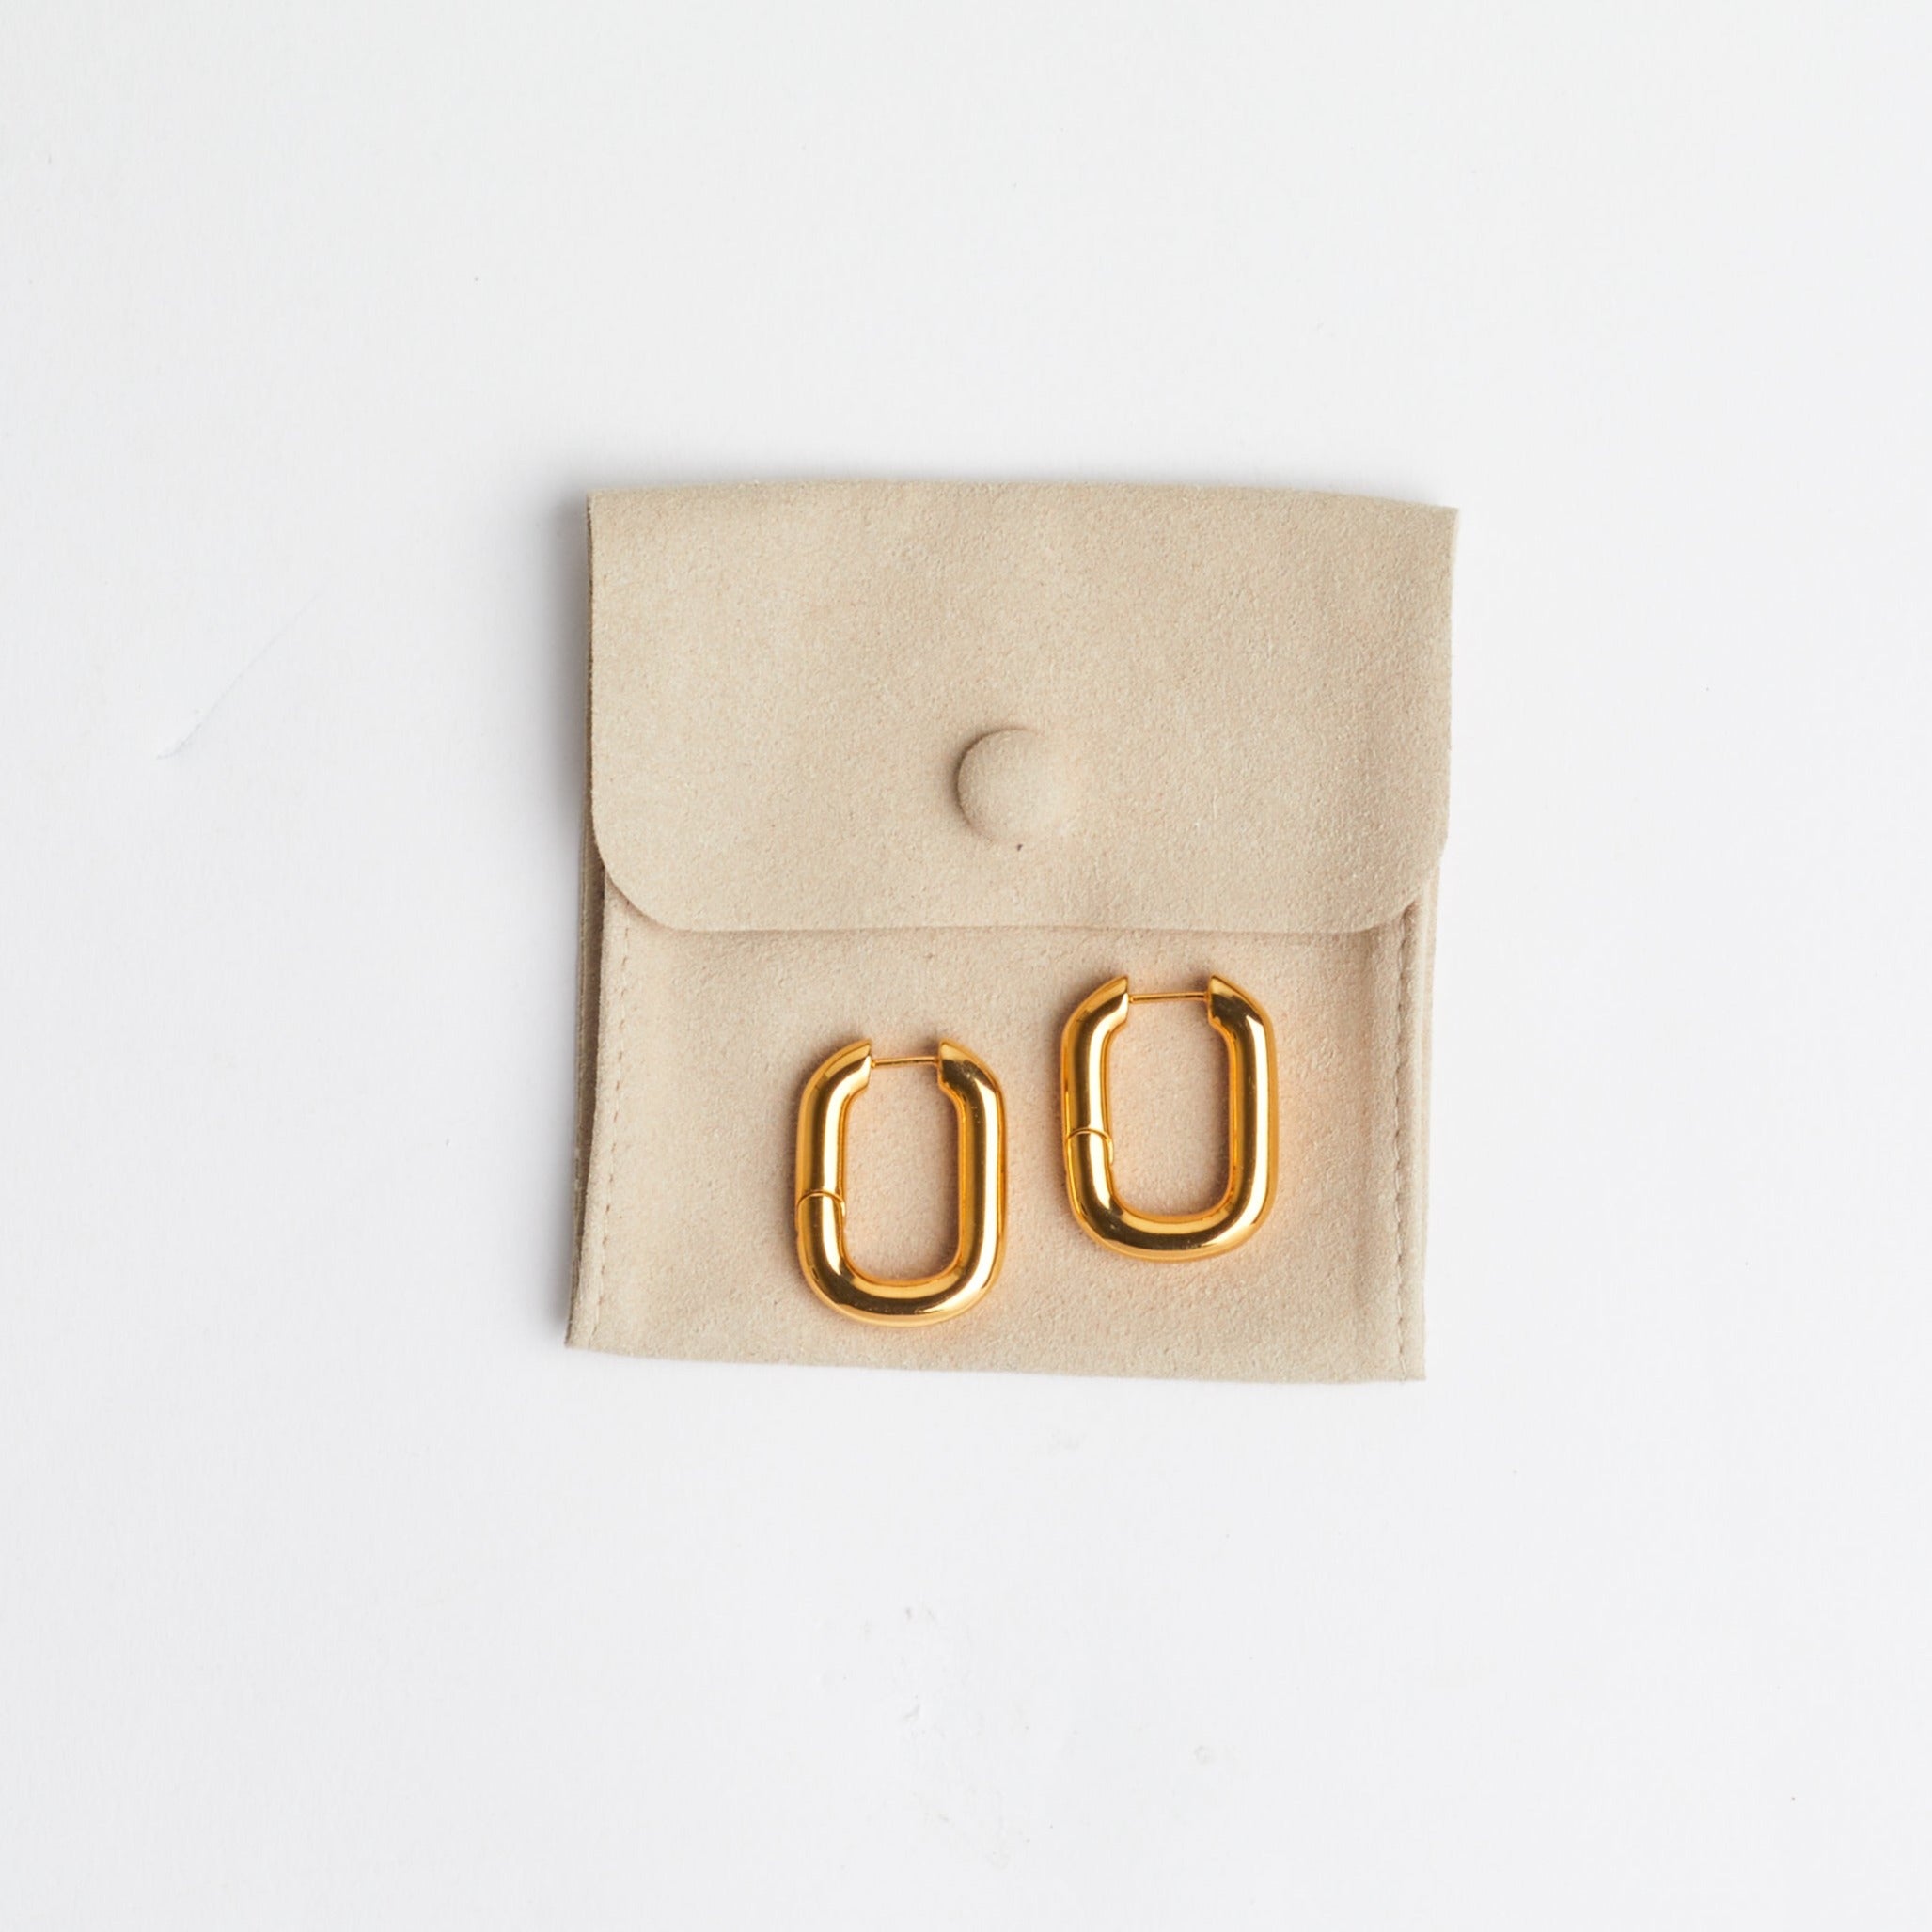 The Taryn | Gold Rectangular Hoop Earrings on tan suede jewelry bag